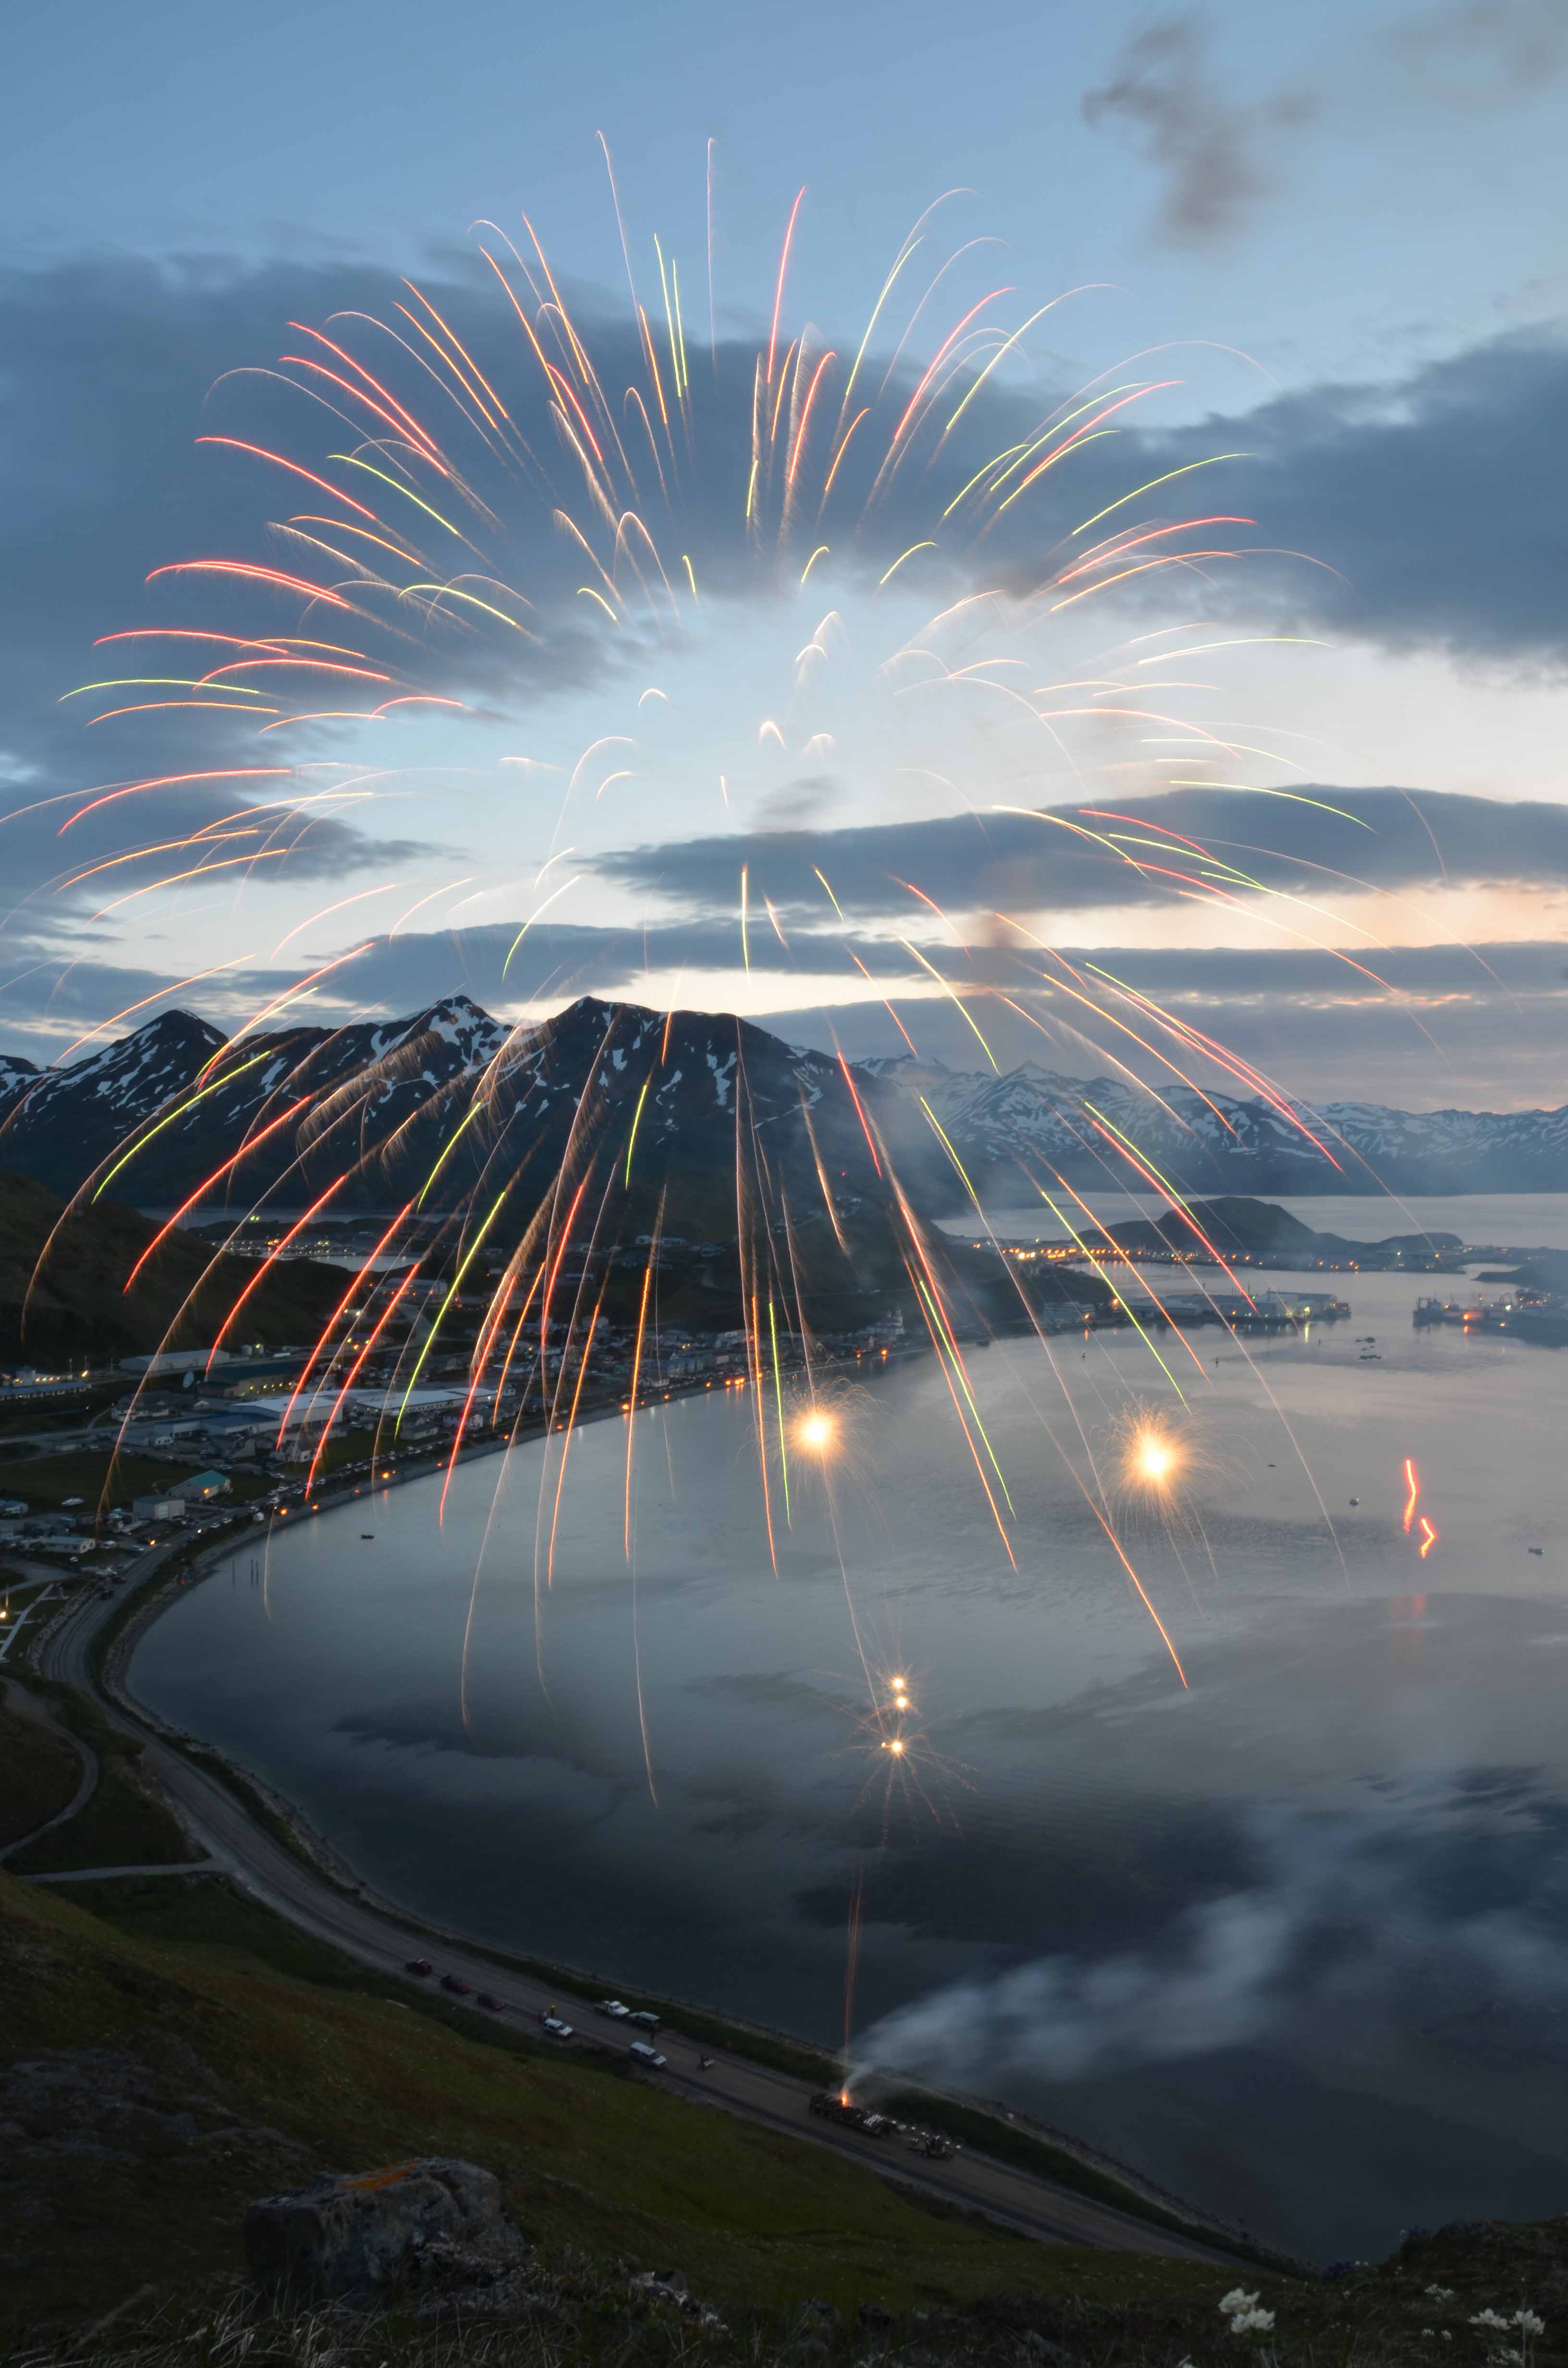 4th of July Fireworks (Photo by Albert Burnham)